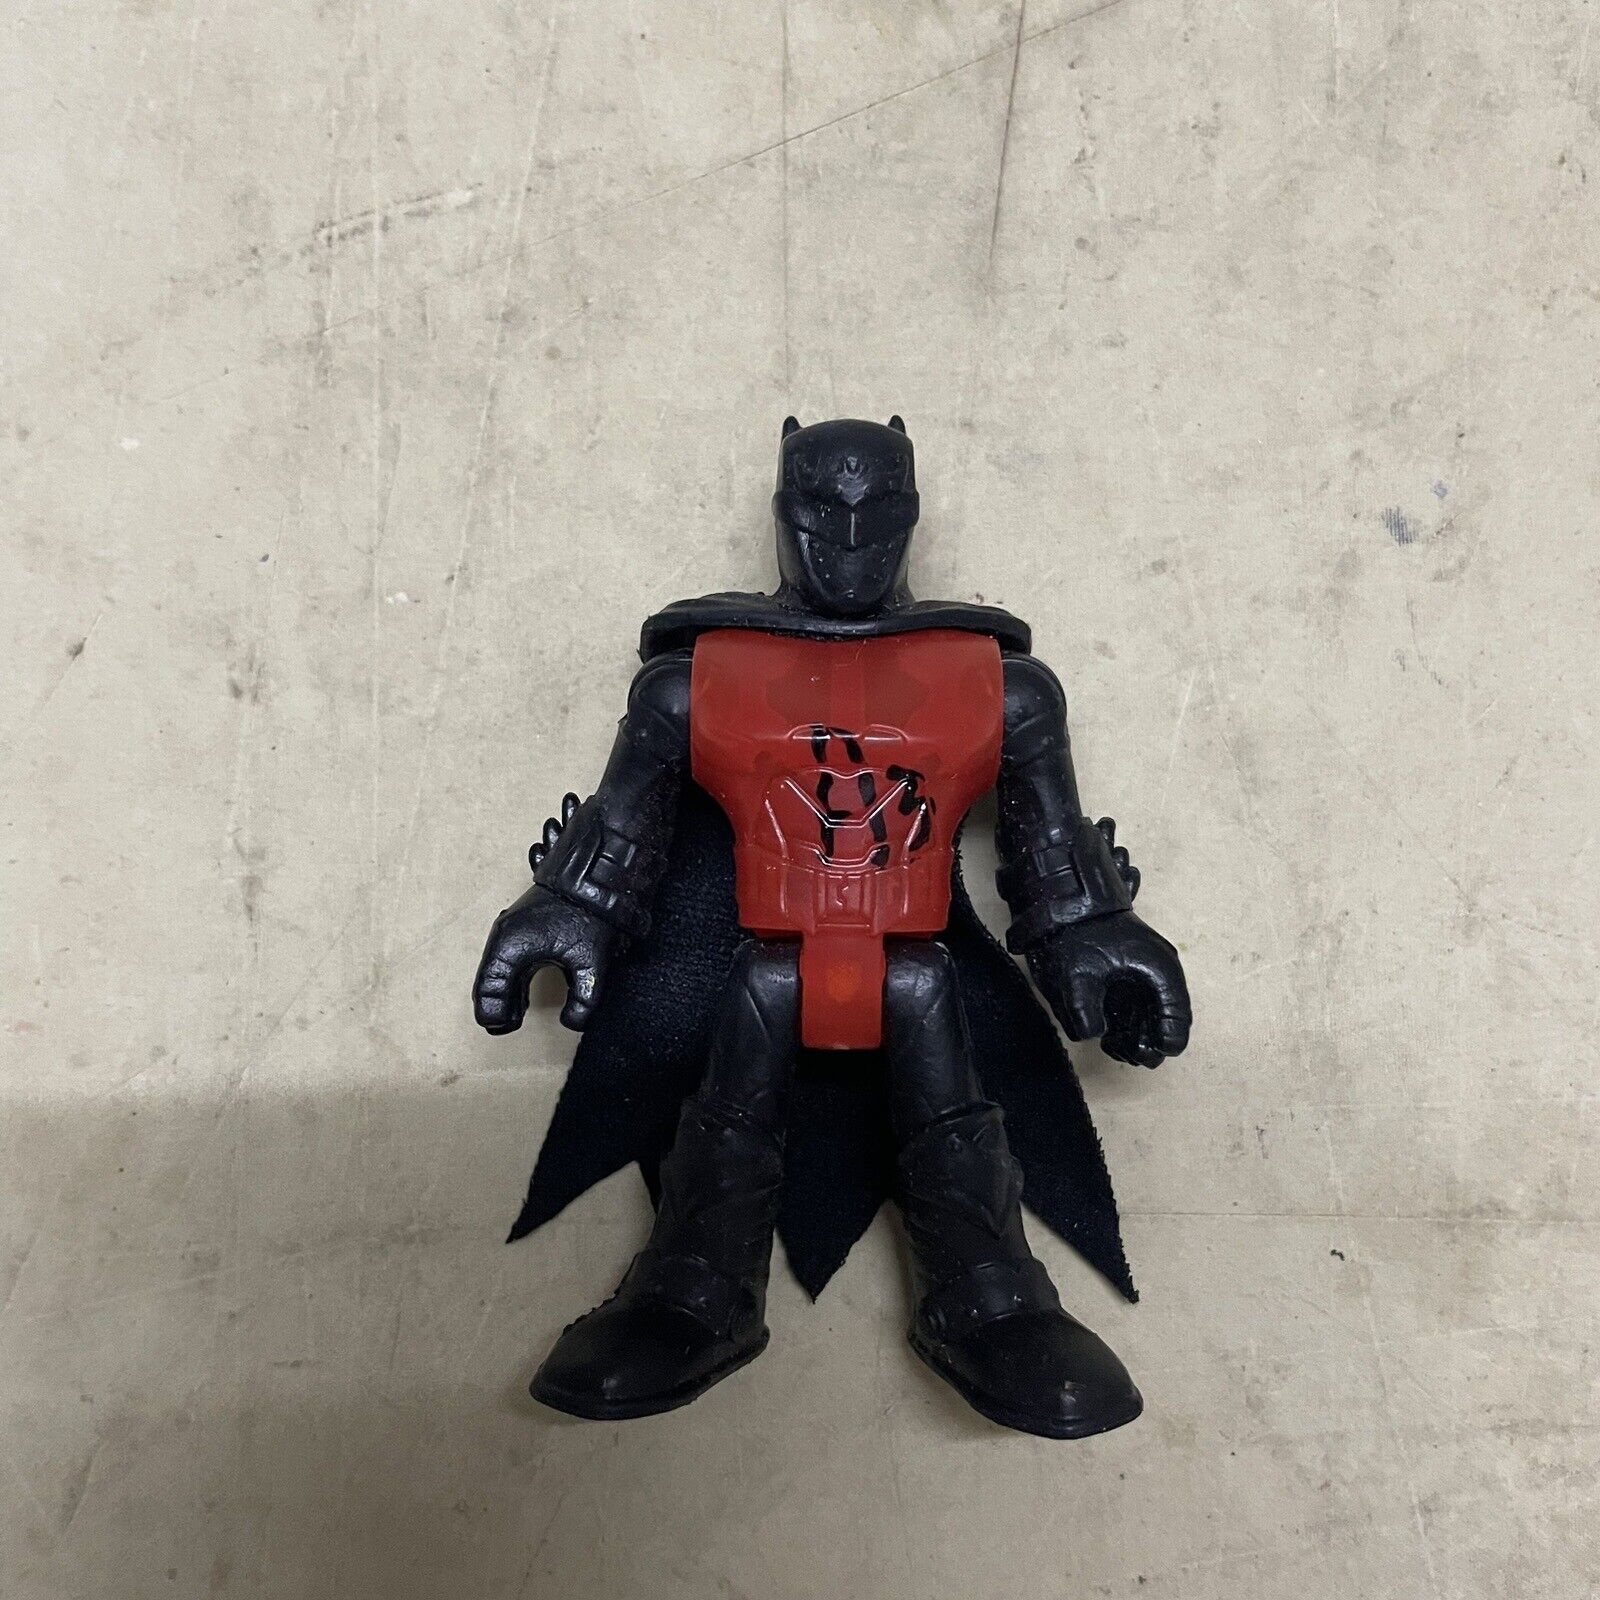 Fisher Price Imaginex DC Super Friends Batman Prototype Action Figure loose